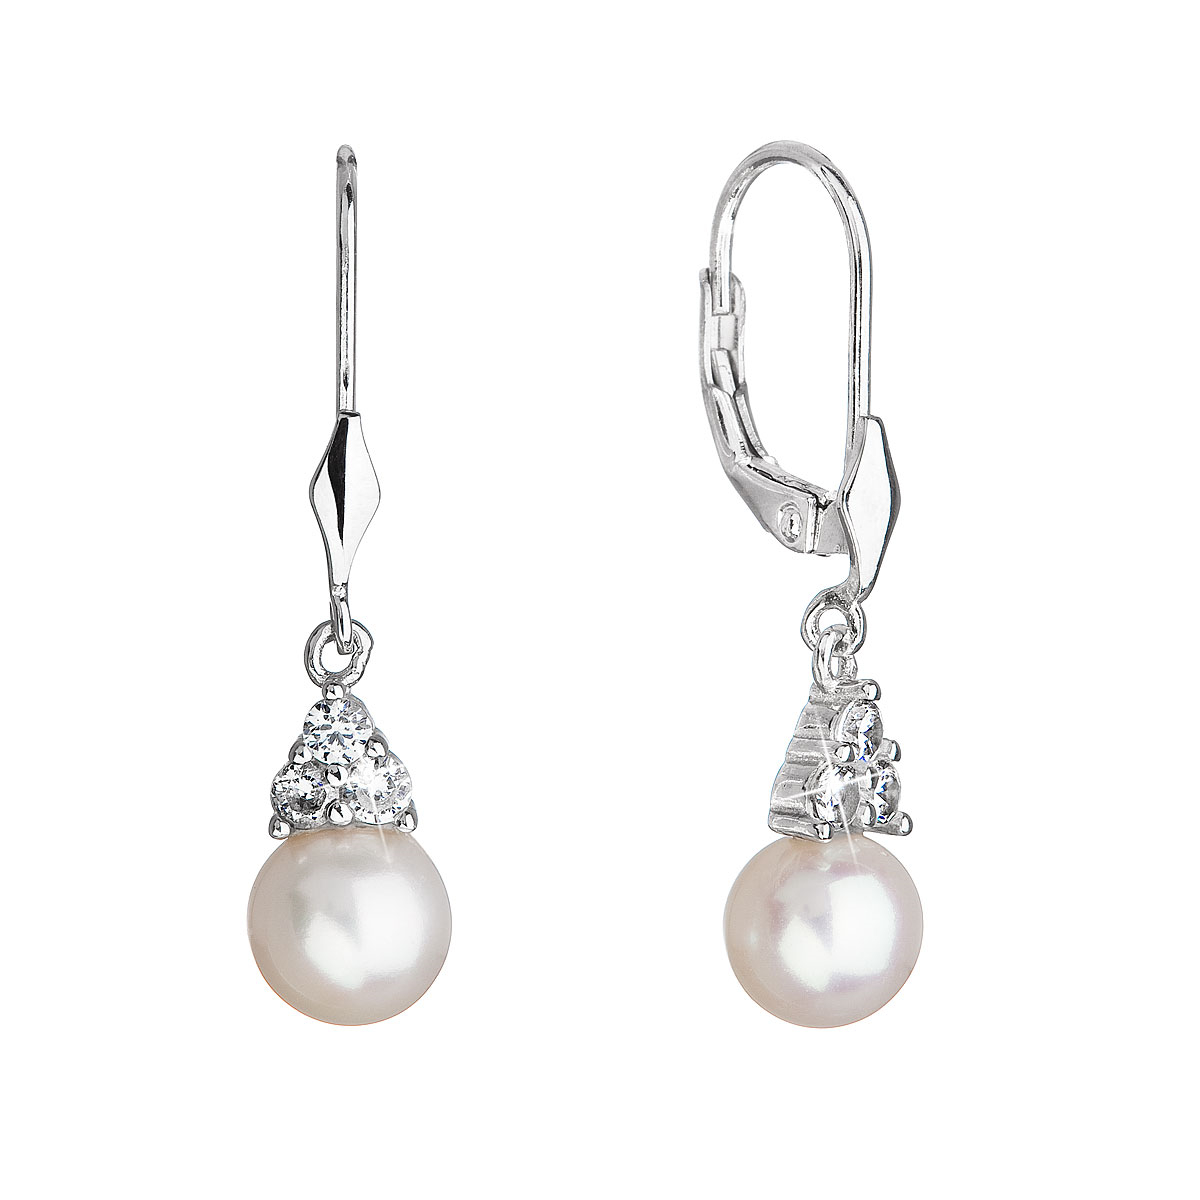 Strieborné visiace náušnice s bielou riečnou perlou a zirkónmi